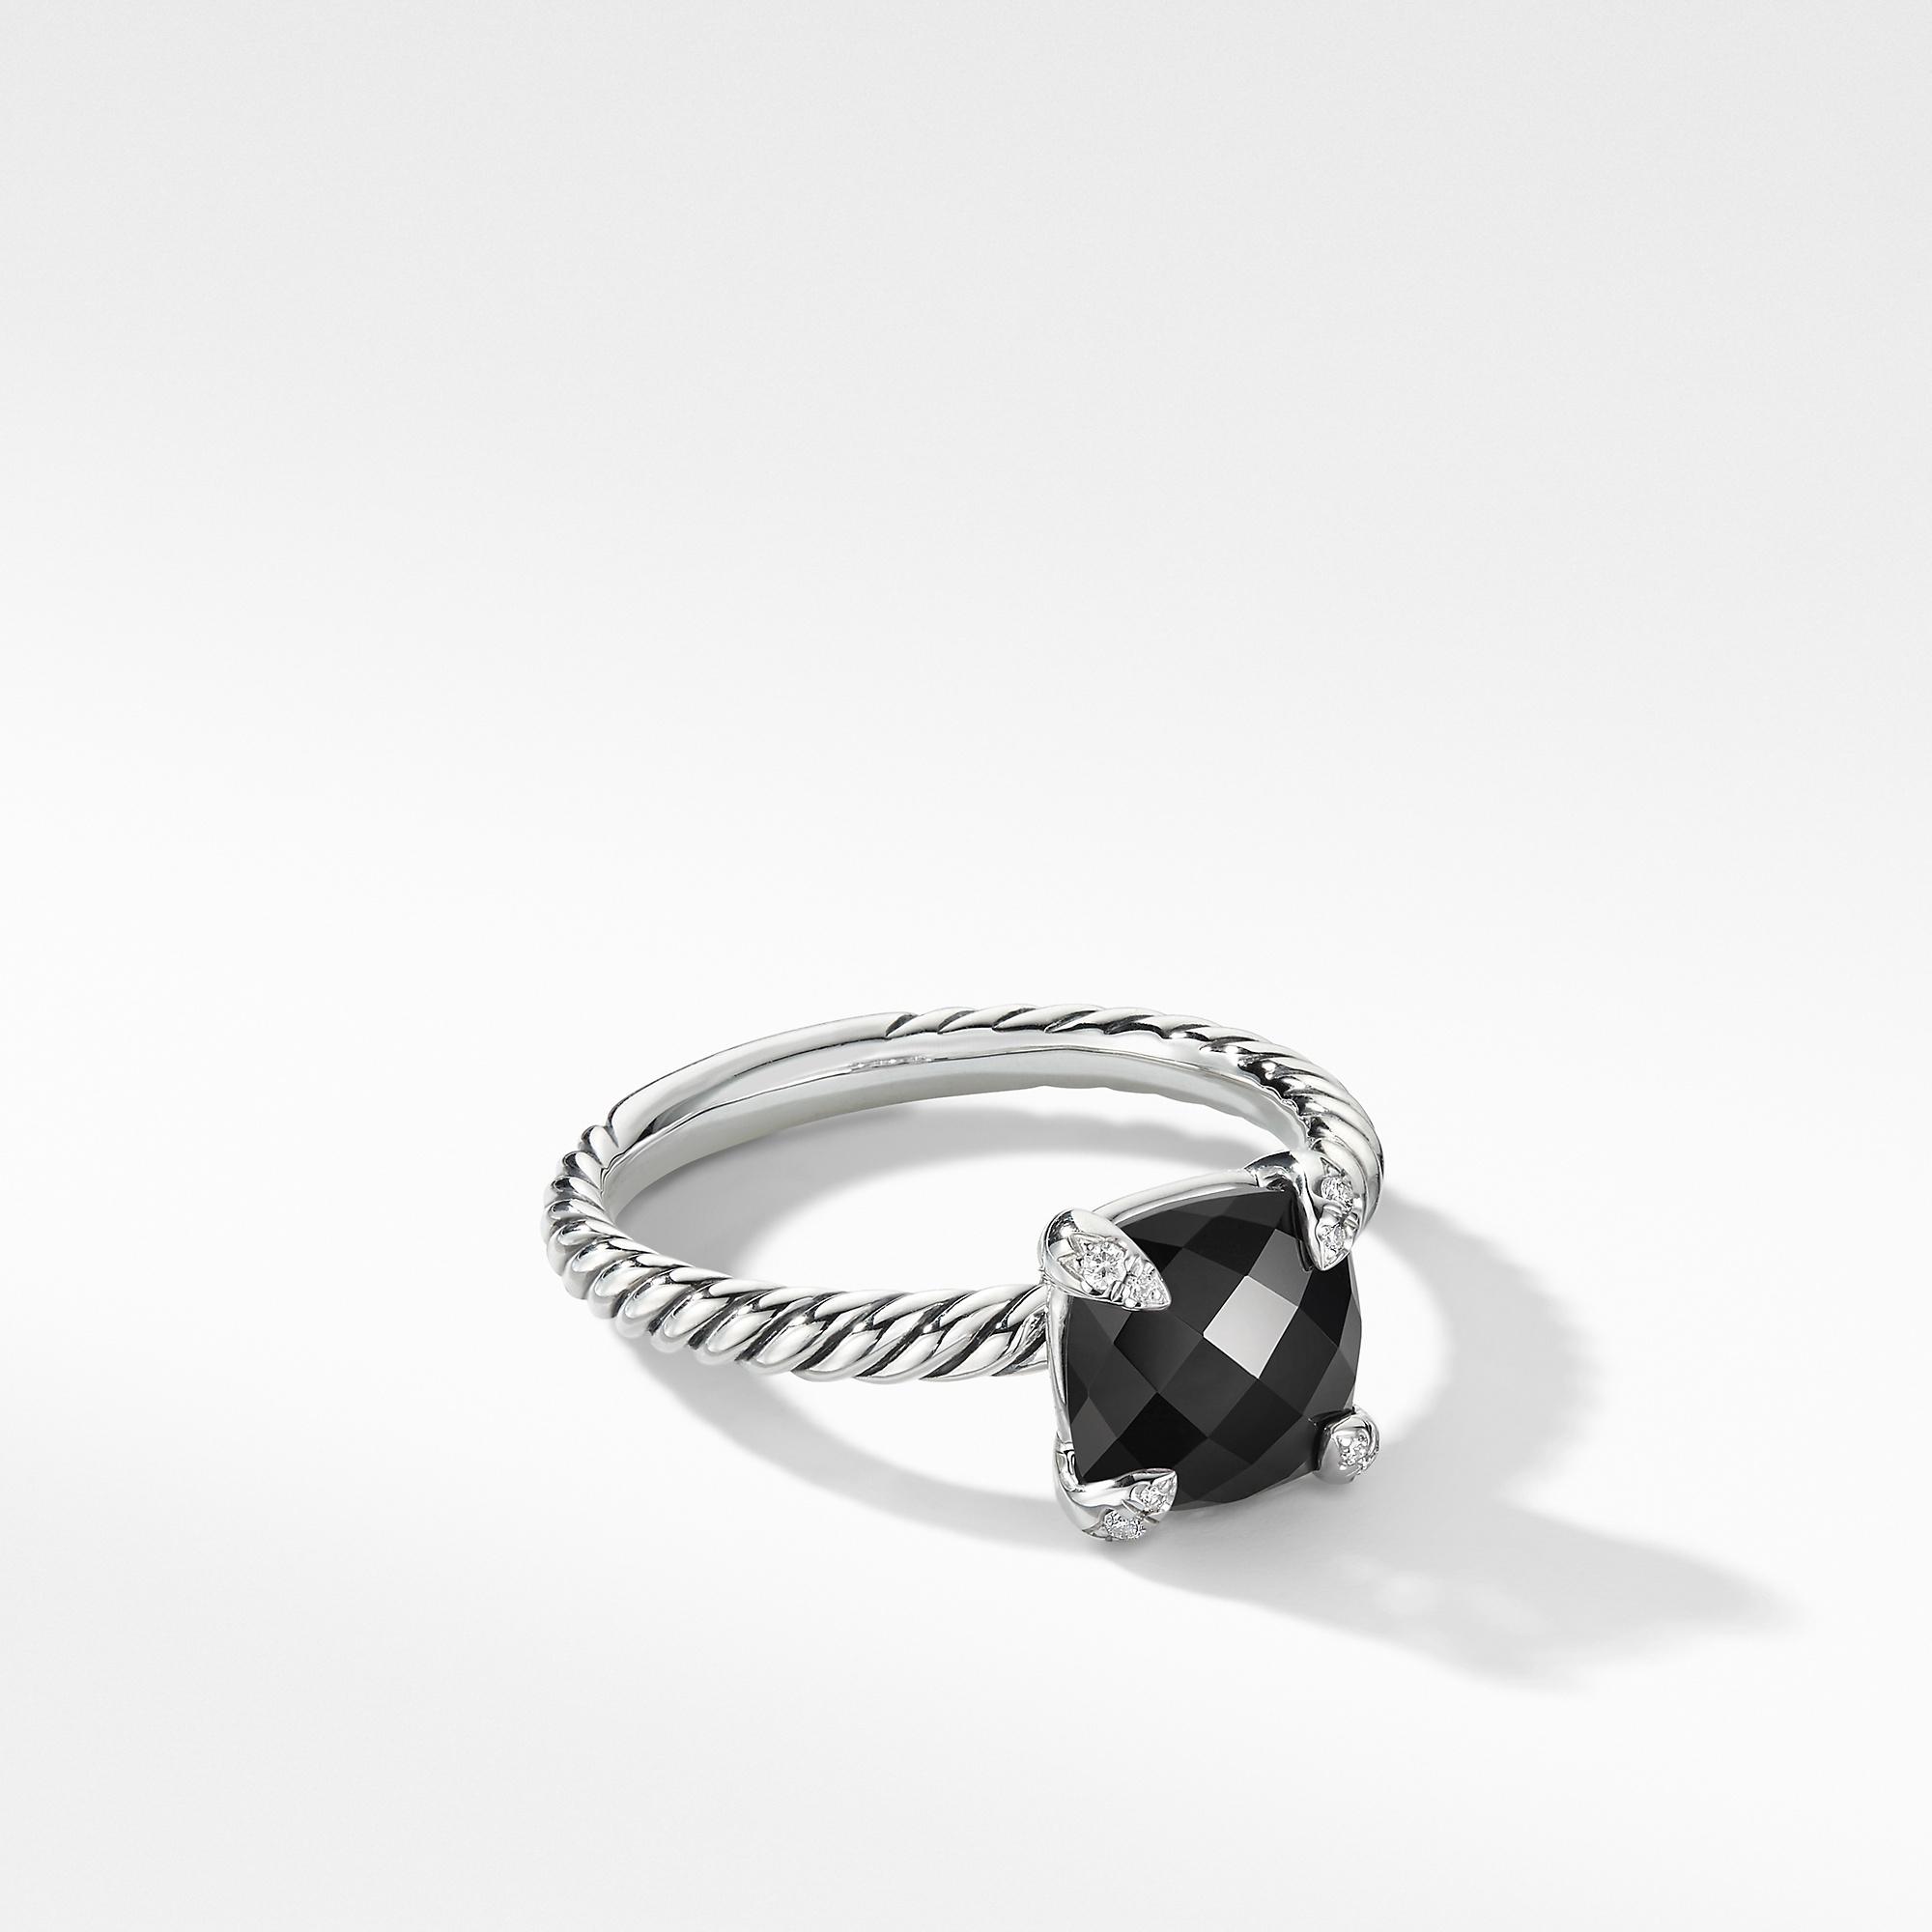 David Yurman Chatelaine Ring with Black Onyx and Diamonds, size 6.5